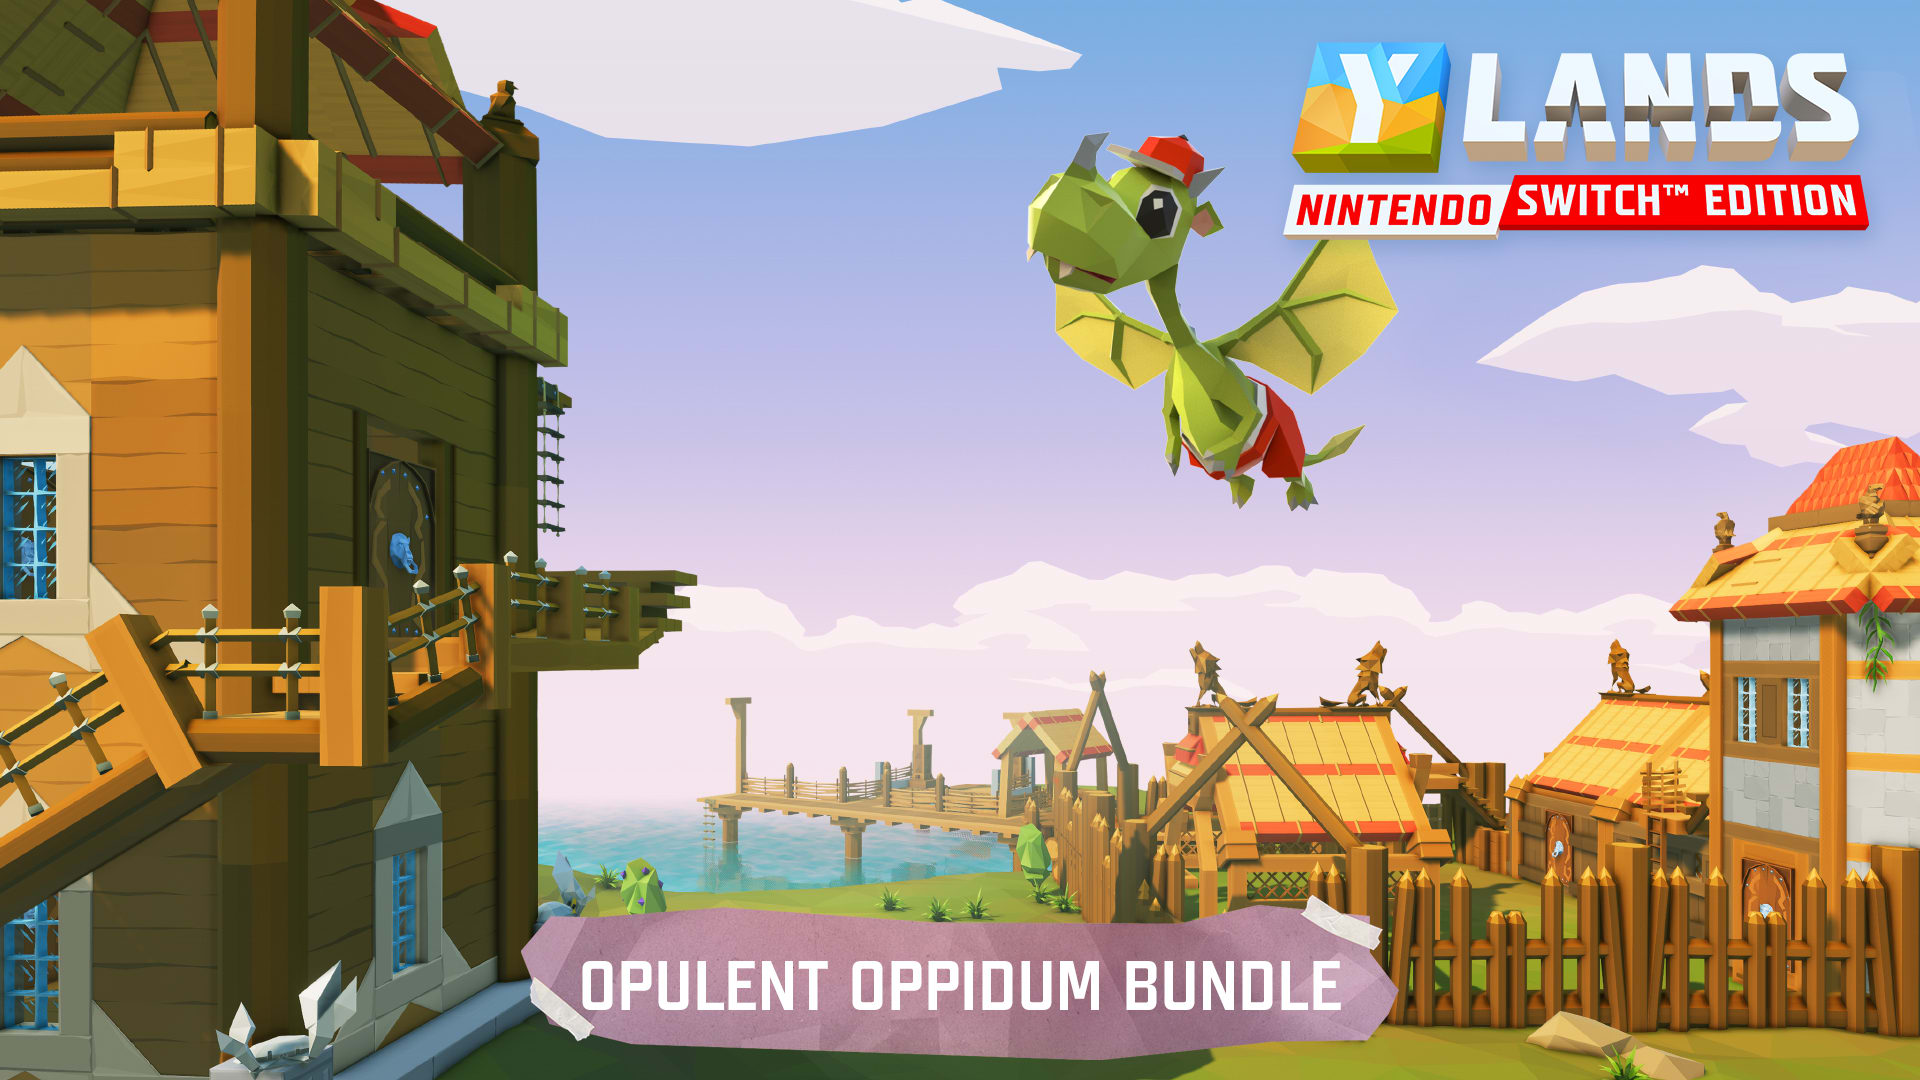 Ylands Nintendo Switch™ Edition - Lote de Oppidum Opulento